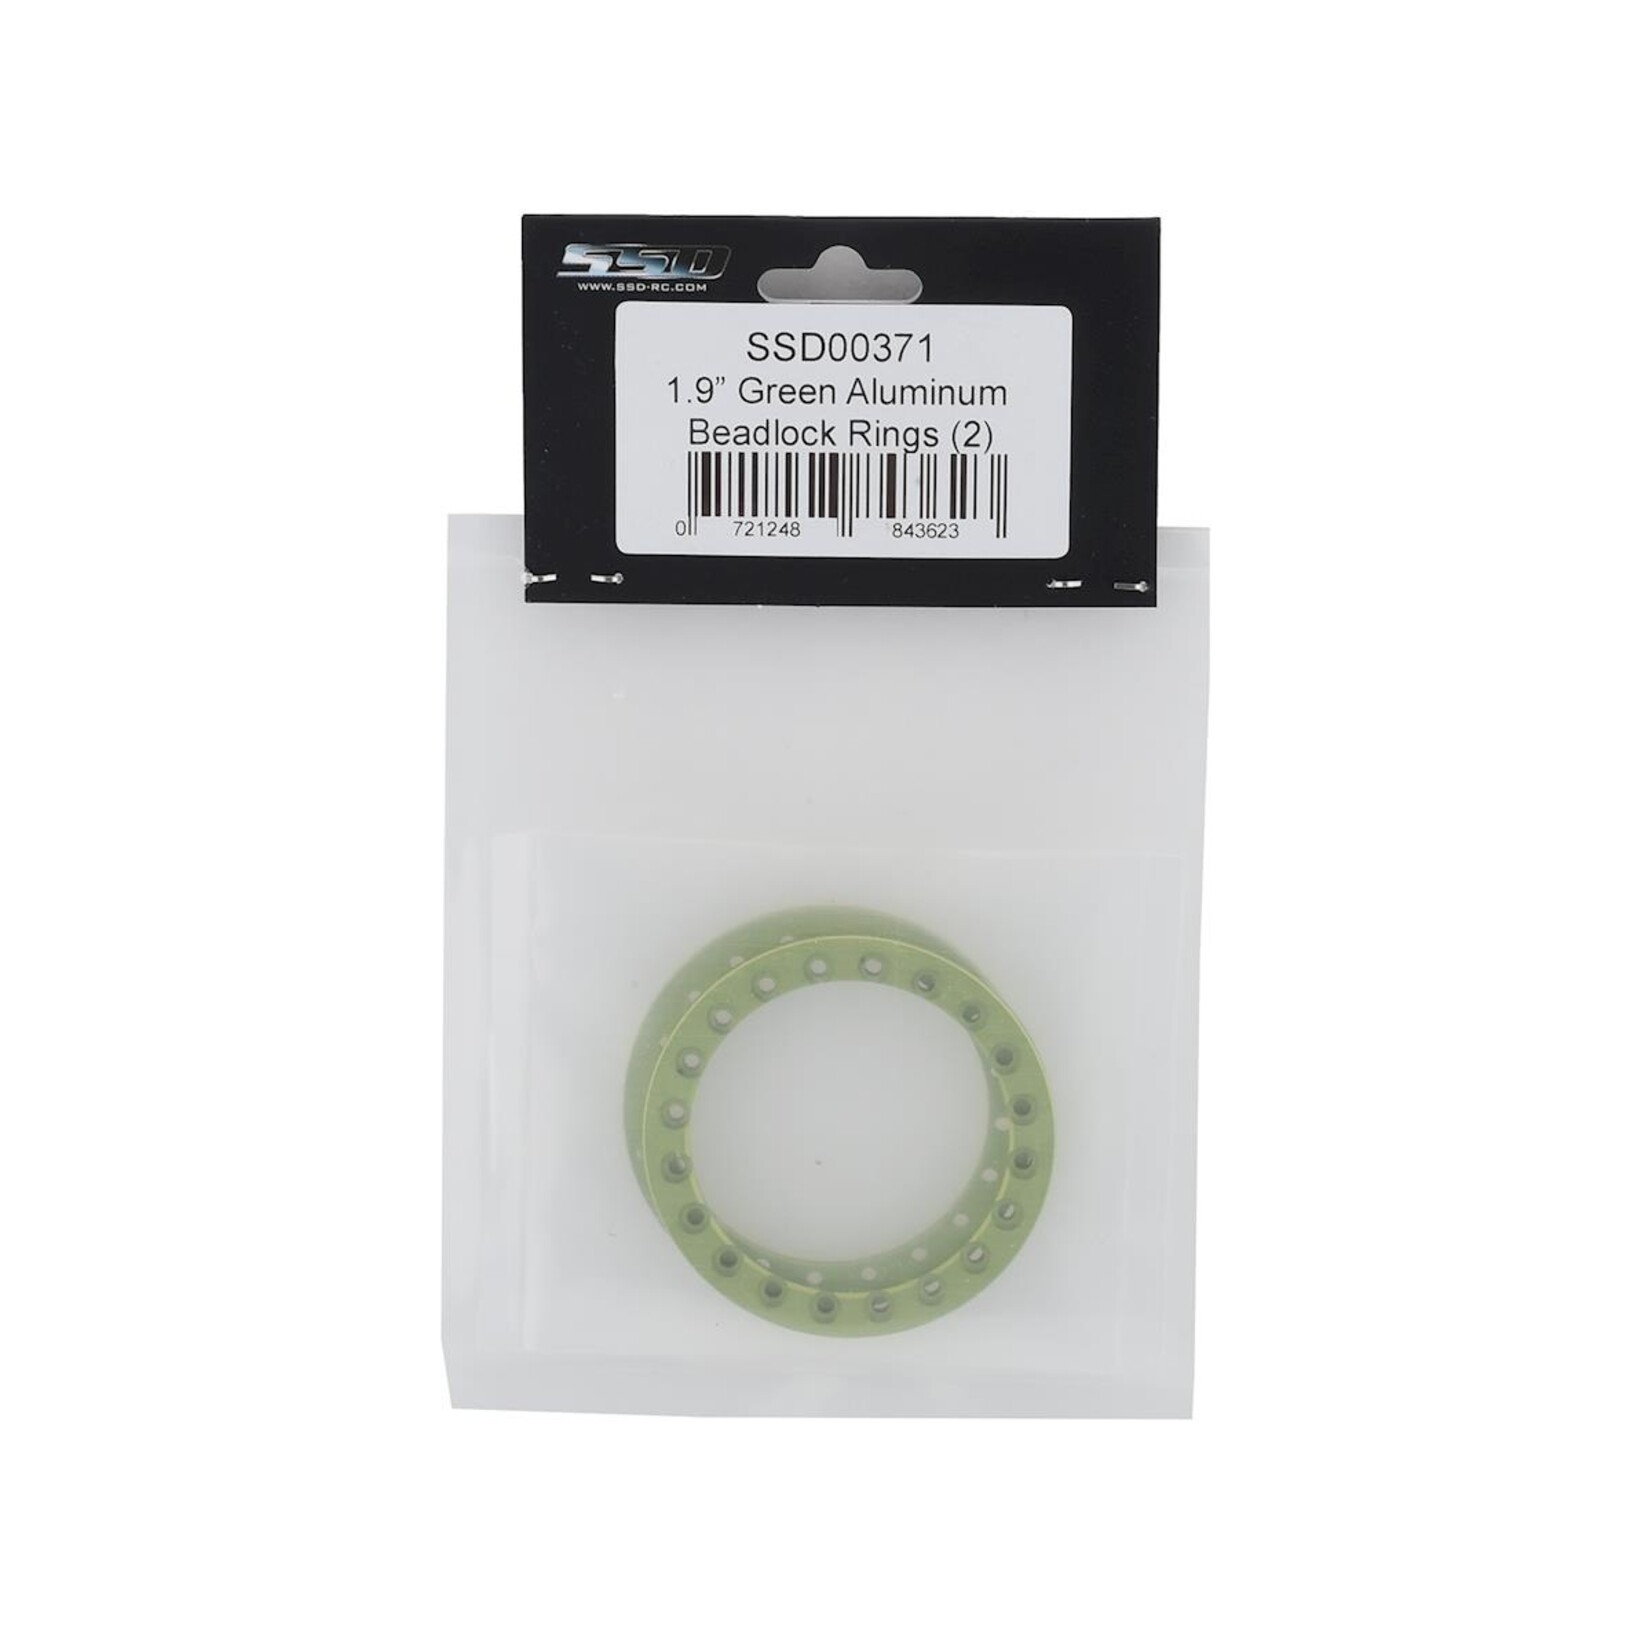 SSD RC SSD RC 1.9” Aluminum Beadlock Rings (Green) (2) #SSD00371